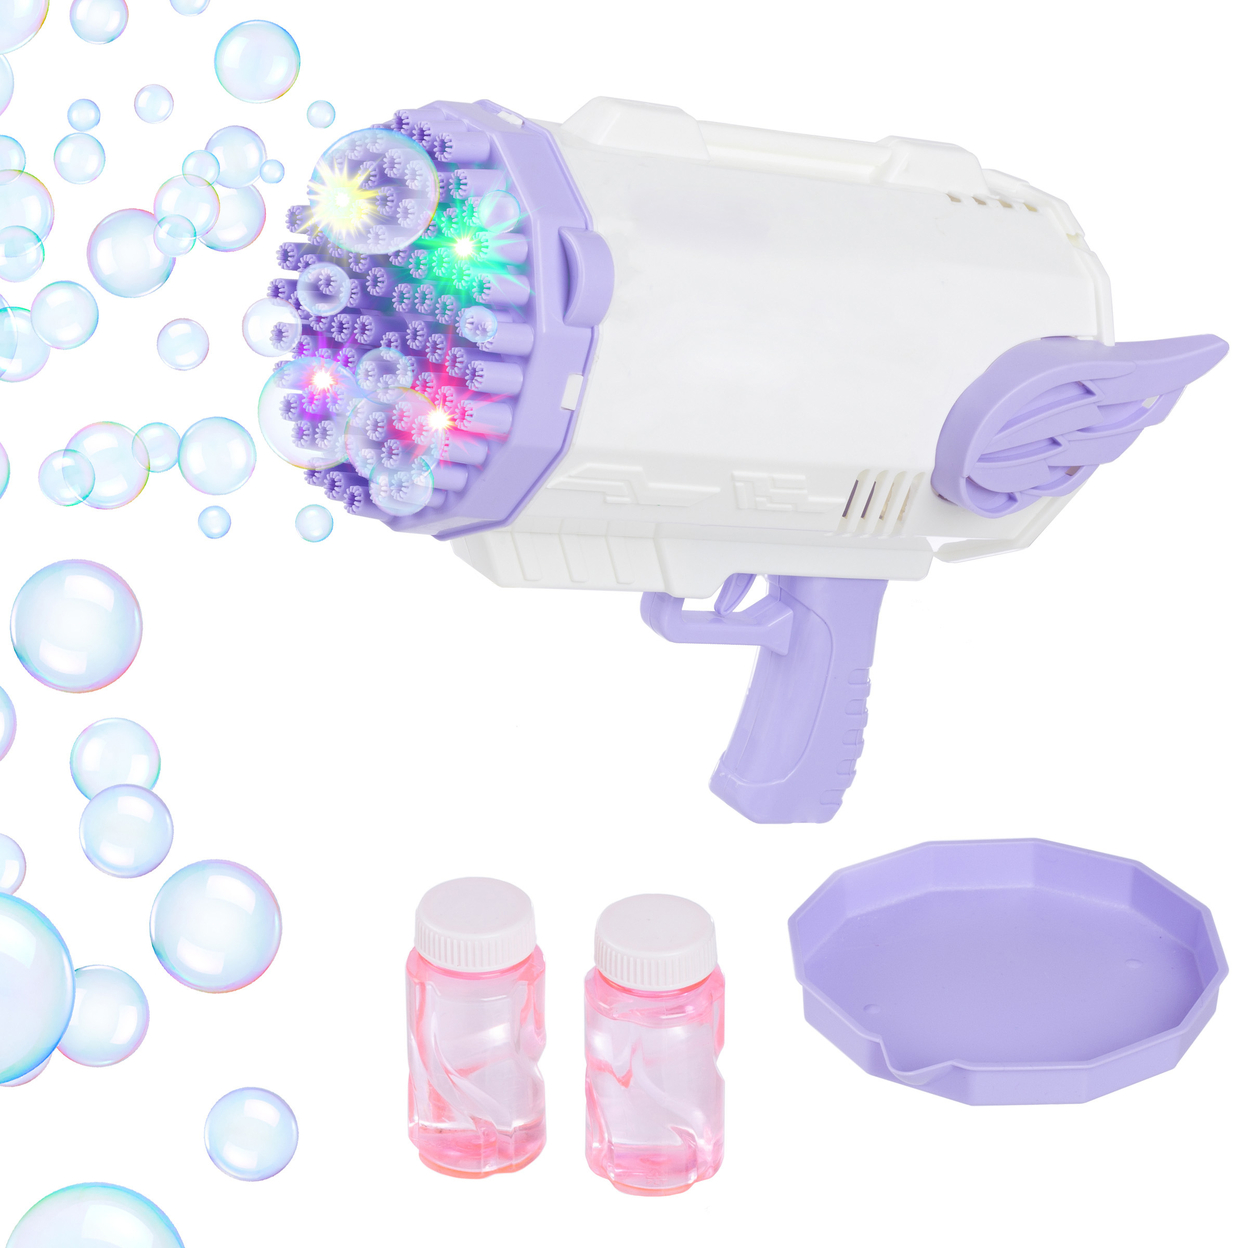 Handheld Bubble Machine 80 Holes Colorful LED Lights Bubble Solution For Kids